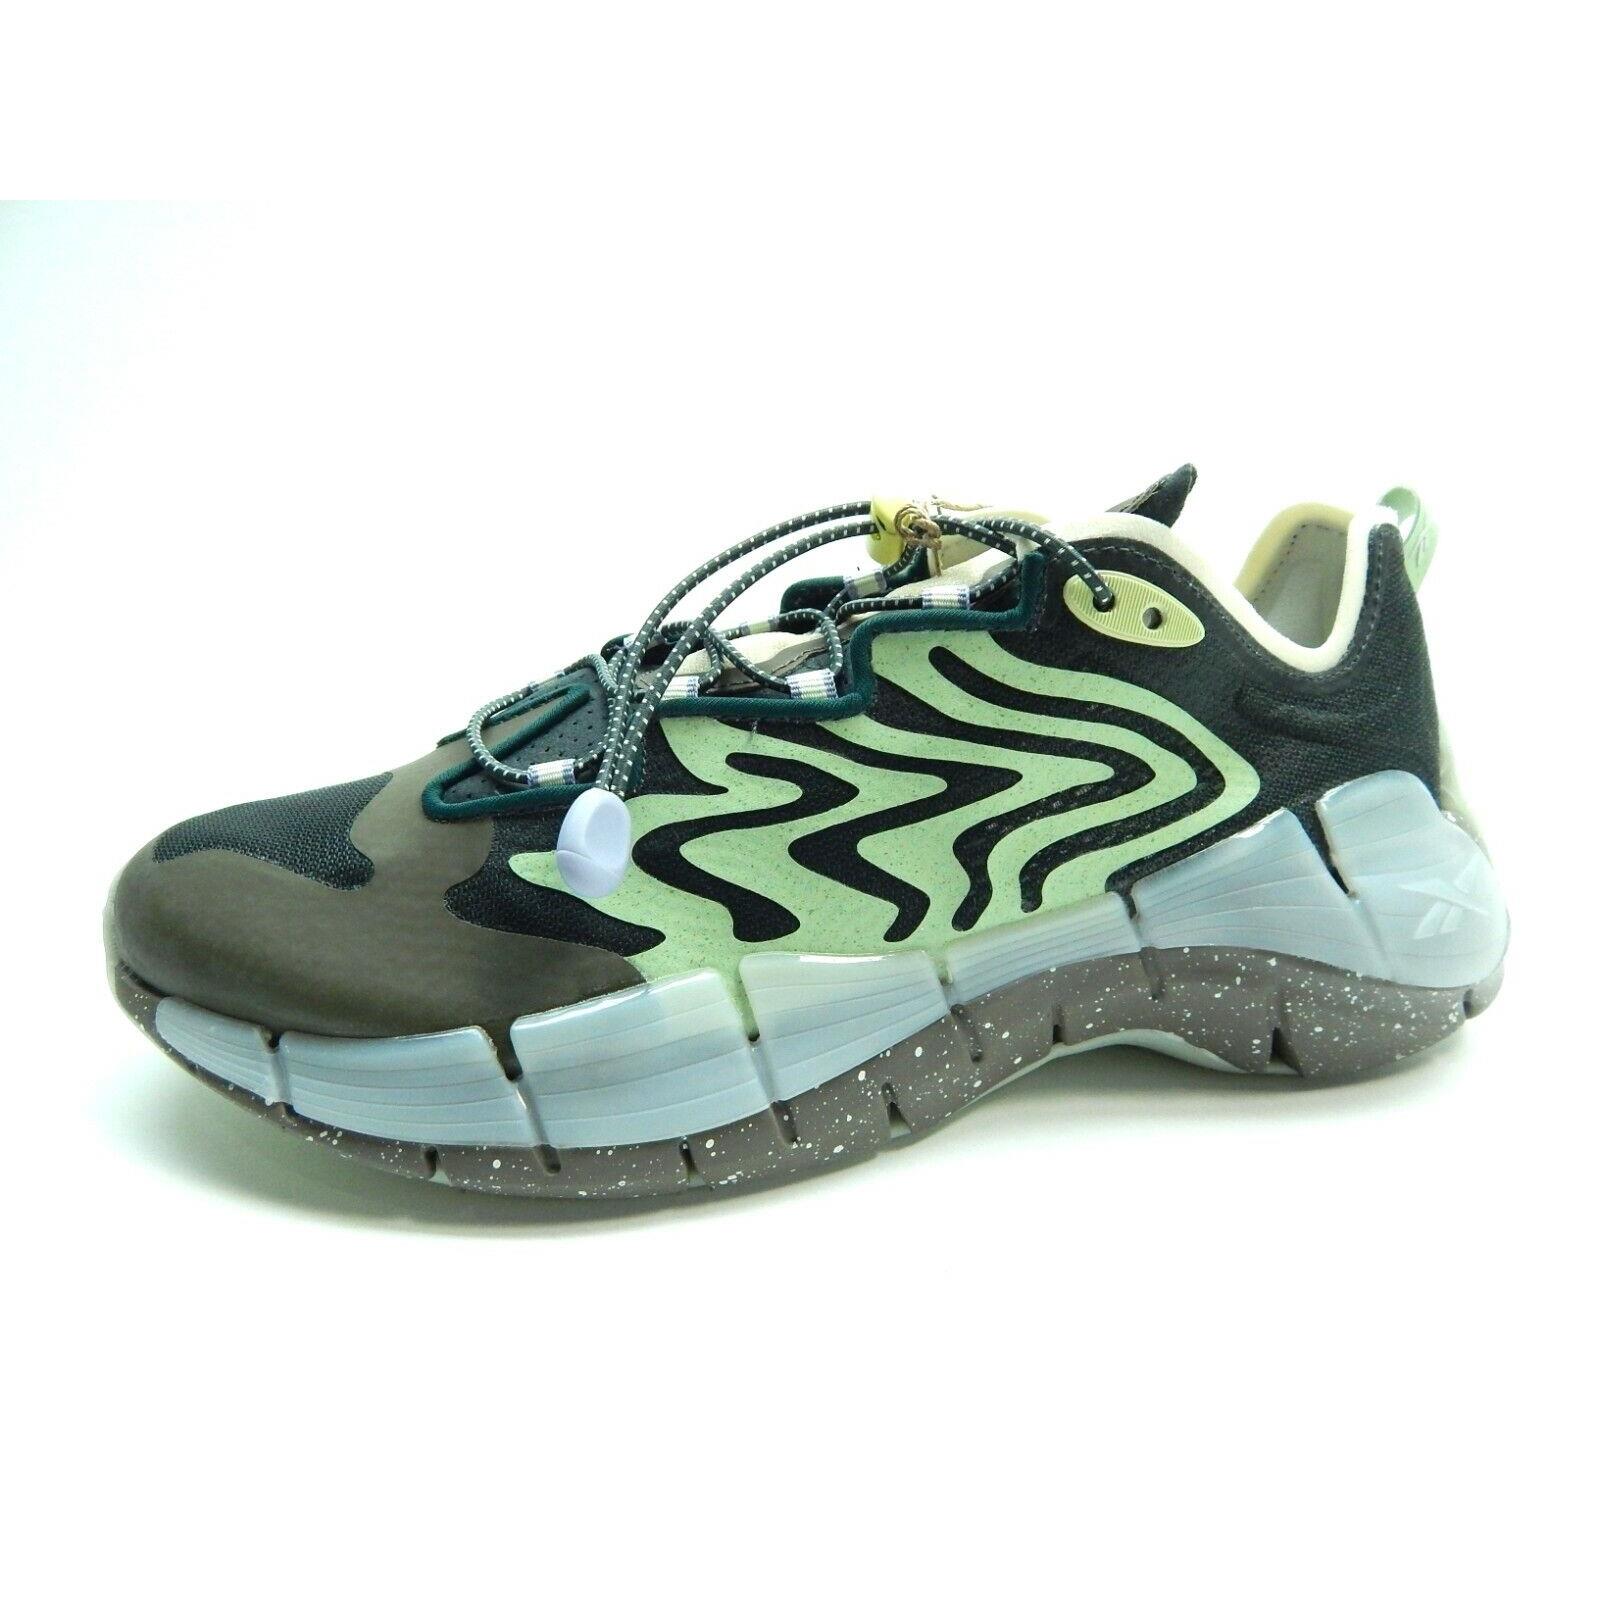 Reebok Zig Kinetica II Running S23890 Men Shoes Size 13